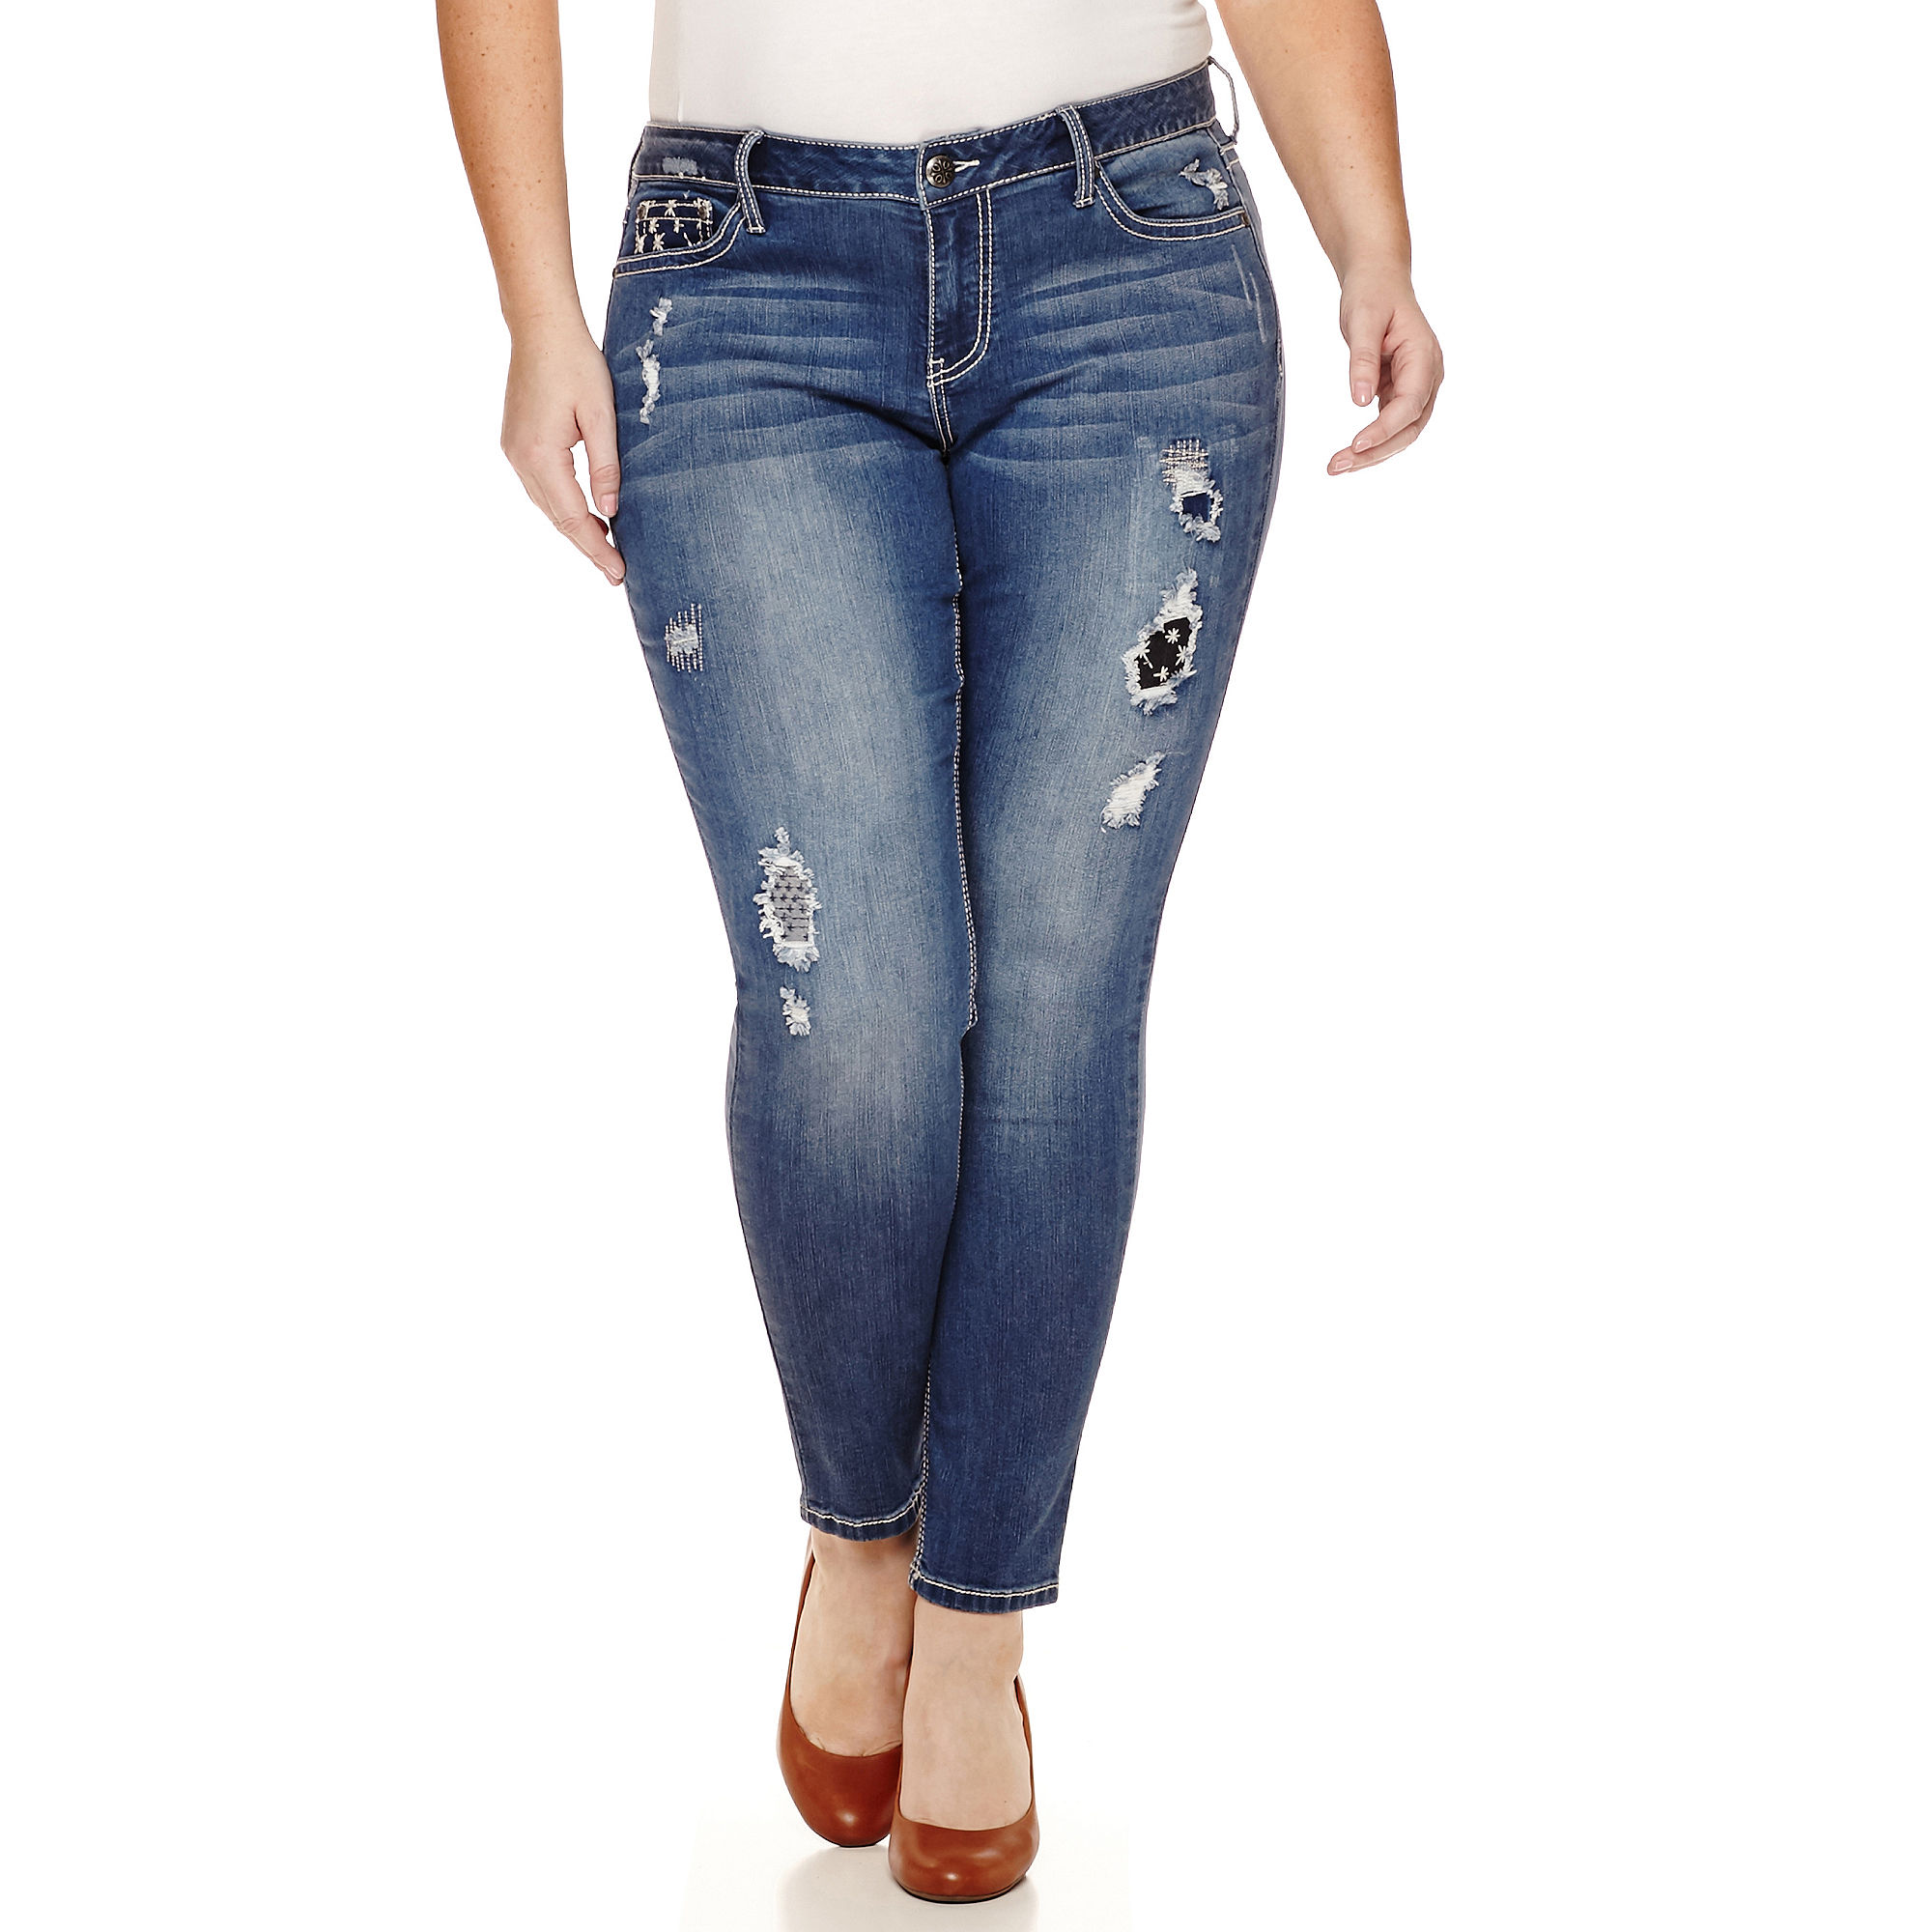 Plus Size Skinny Jeans | Jeans Hub